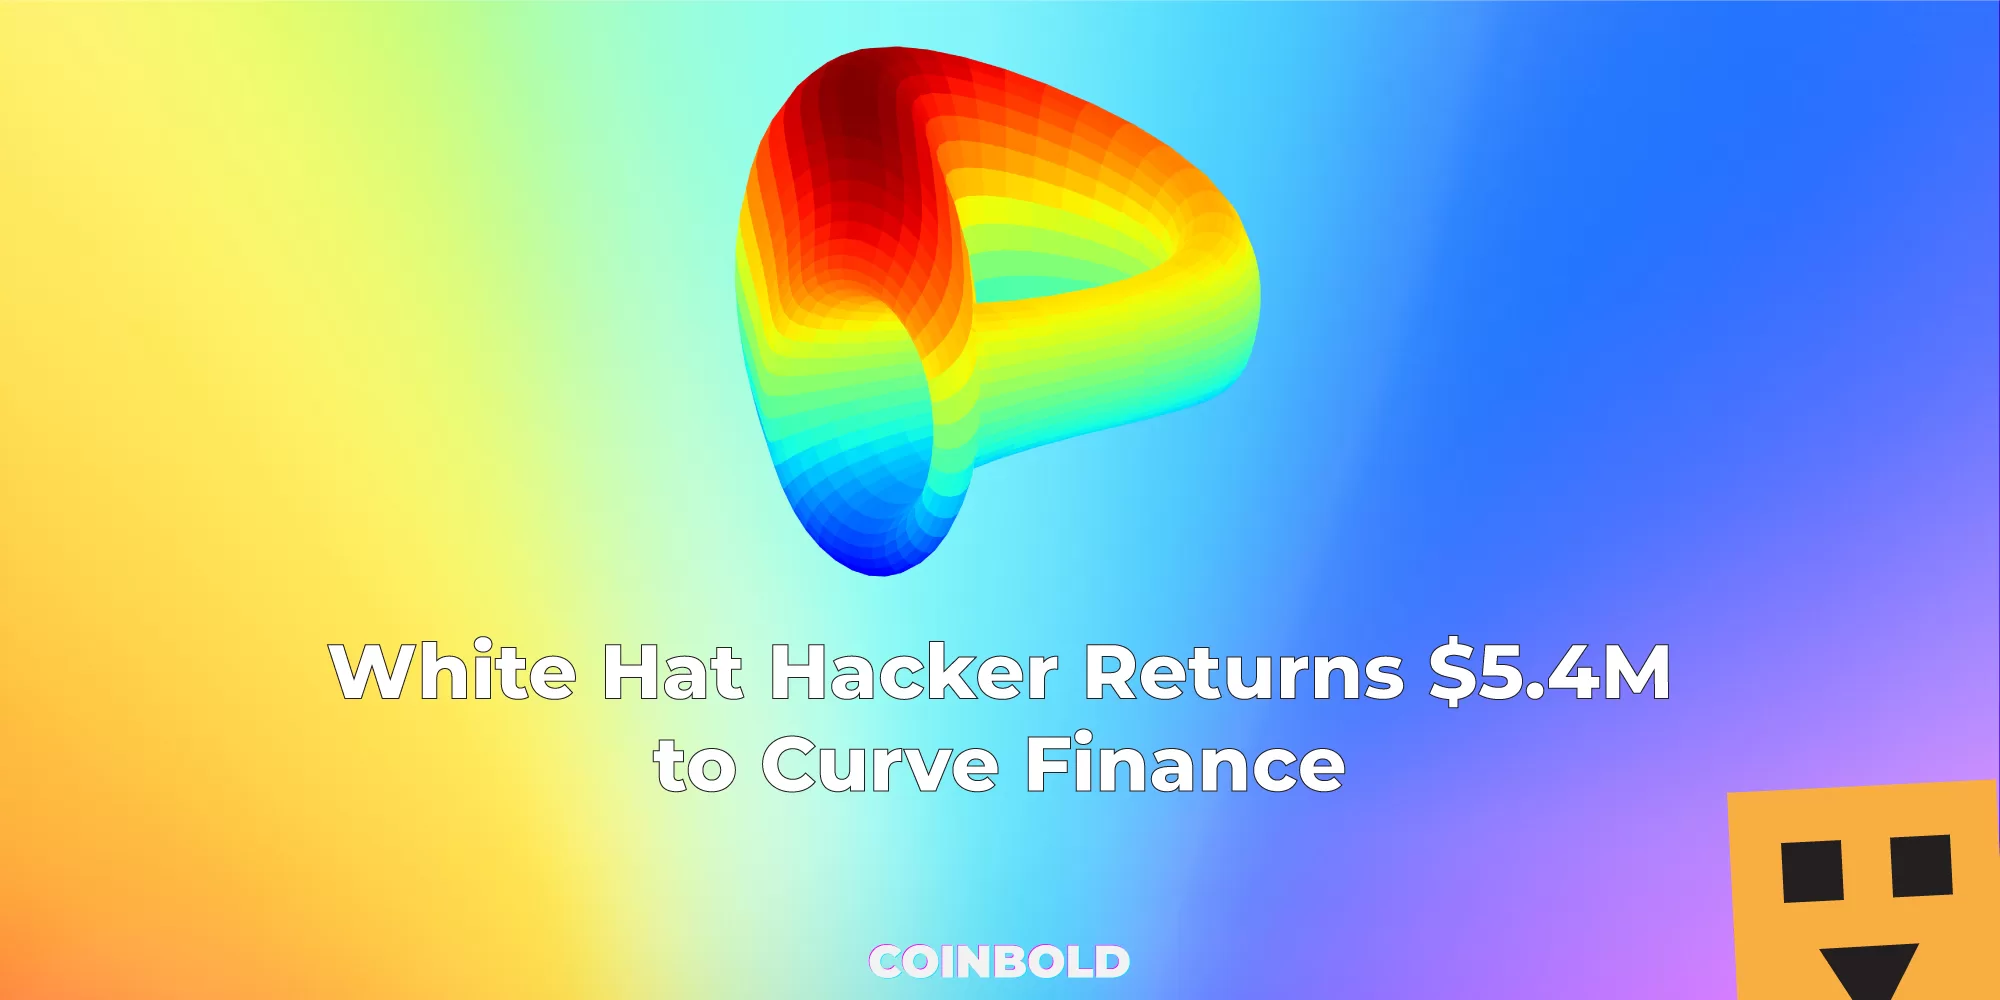 White Hat Hacker Returns $5.4M to Curve Finance